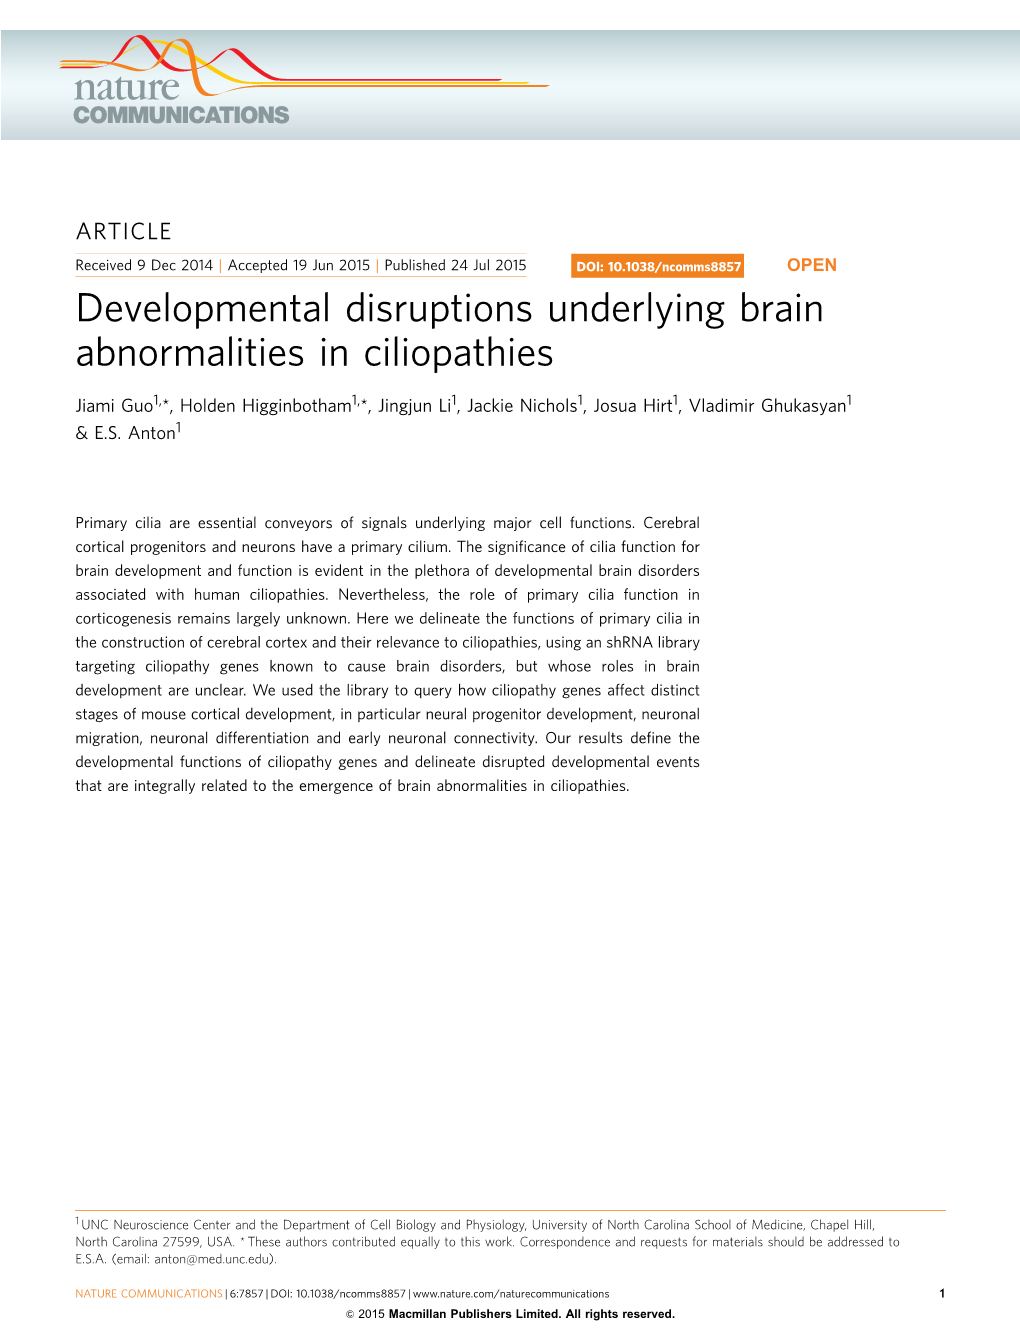 Developmental Disruptions Underlying Brain Abnormalities in Ciliopathies